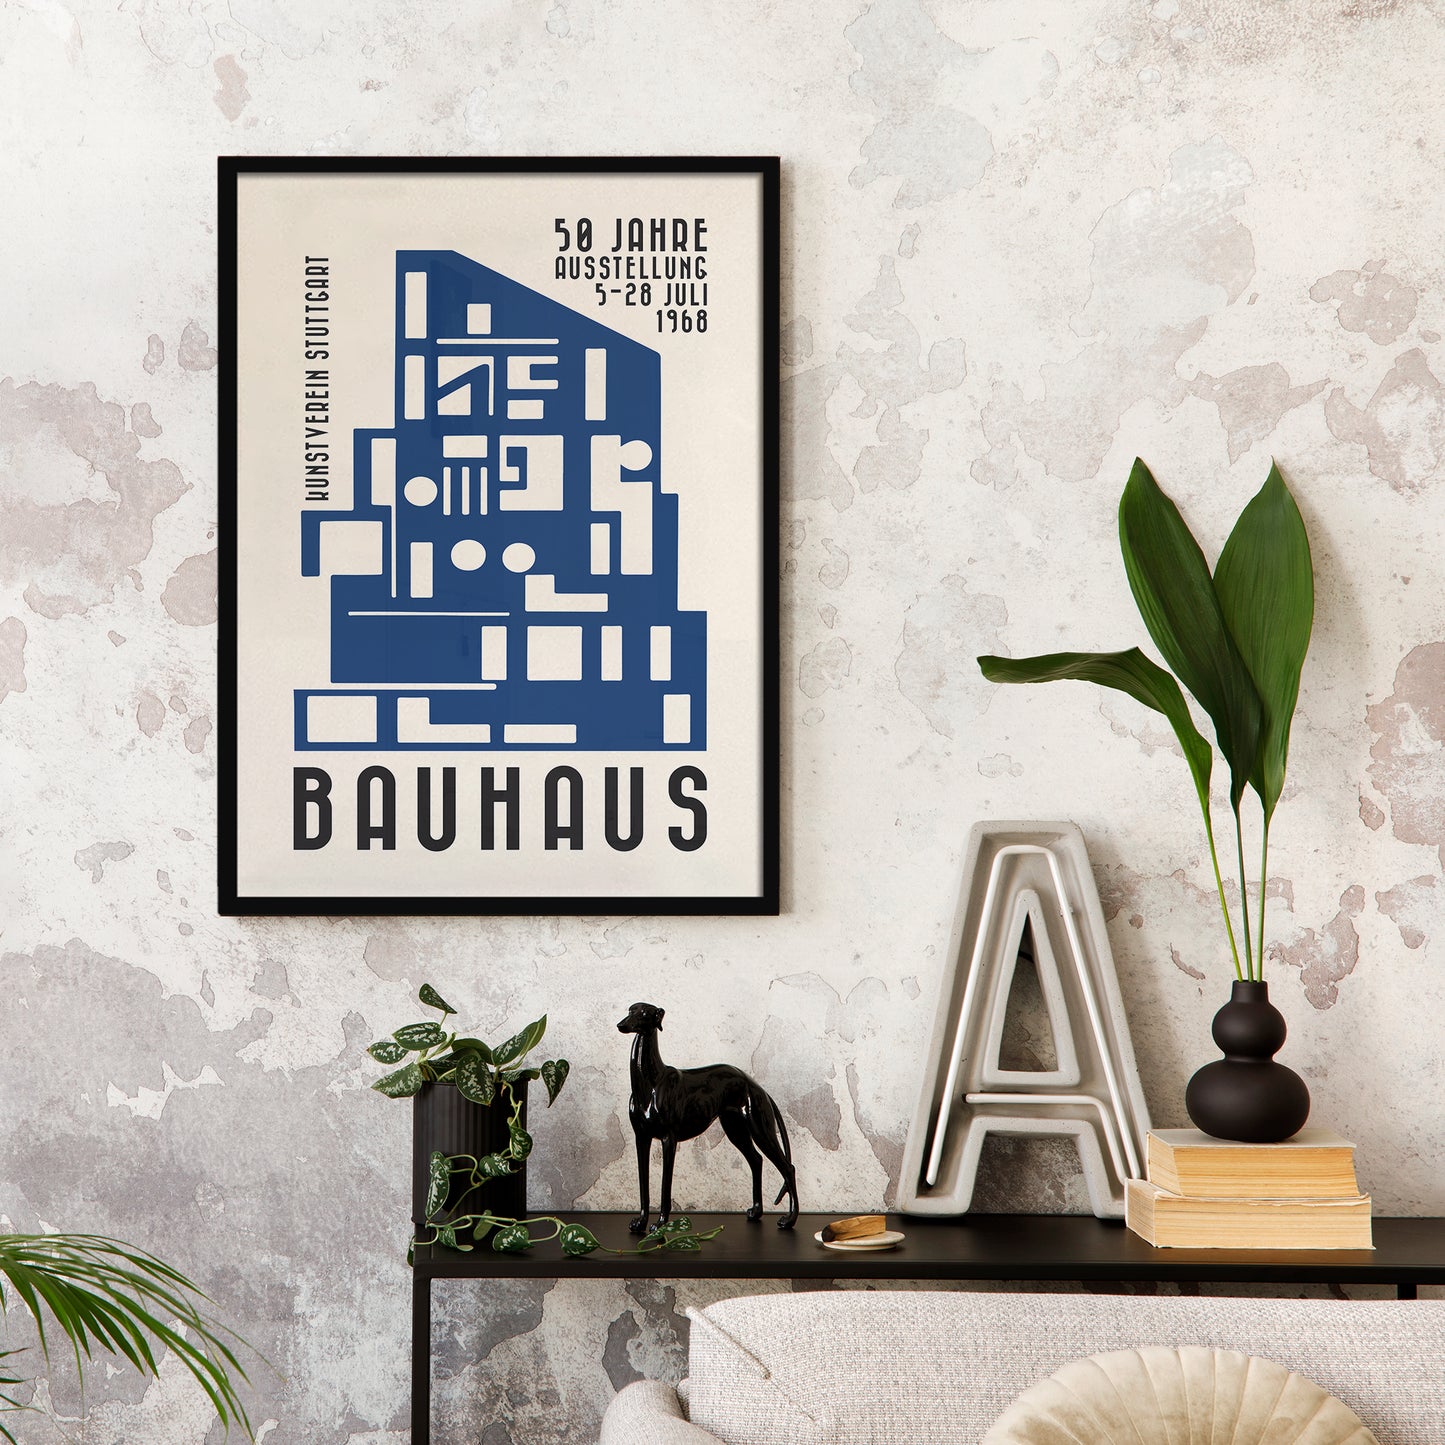 Bauhaus 50 Jahre Ausstellung, Stuttgart Poster